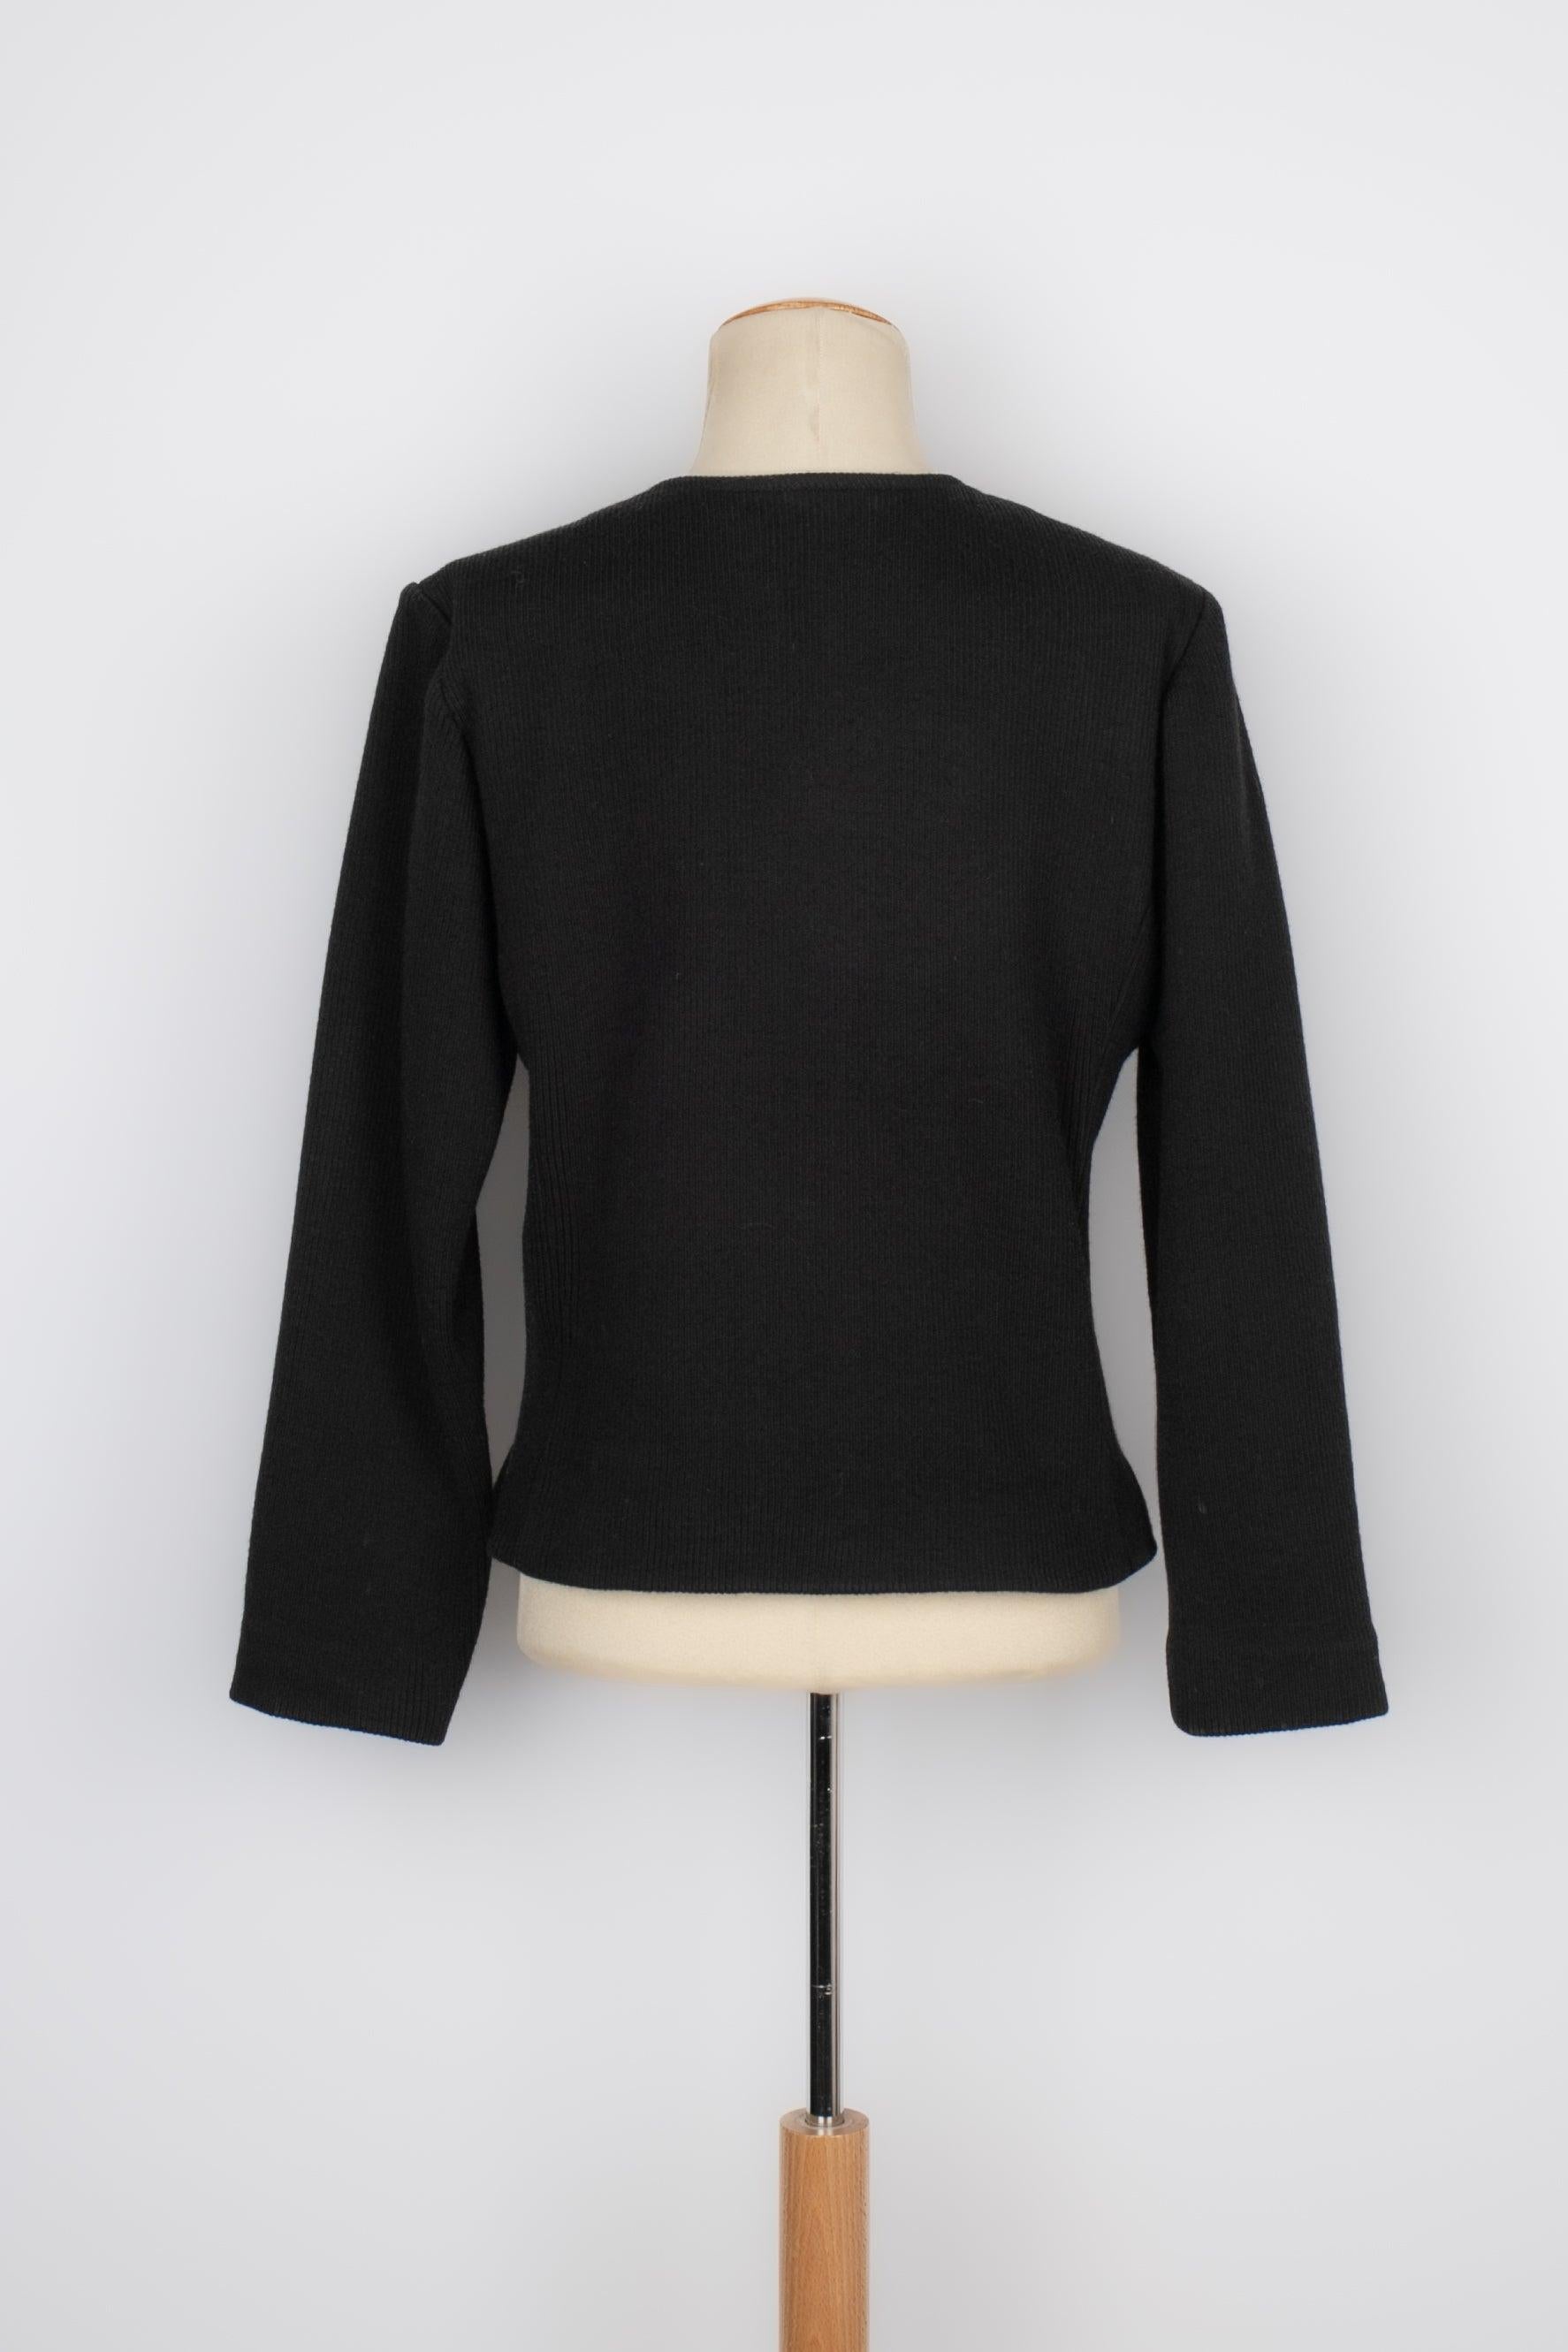 Yves Saint Laurent Black Wool and Gold Lurex Jacket, 1980s In Excellent Condition For Sale In SAINT-OUEN-SUR-SEINE, FR